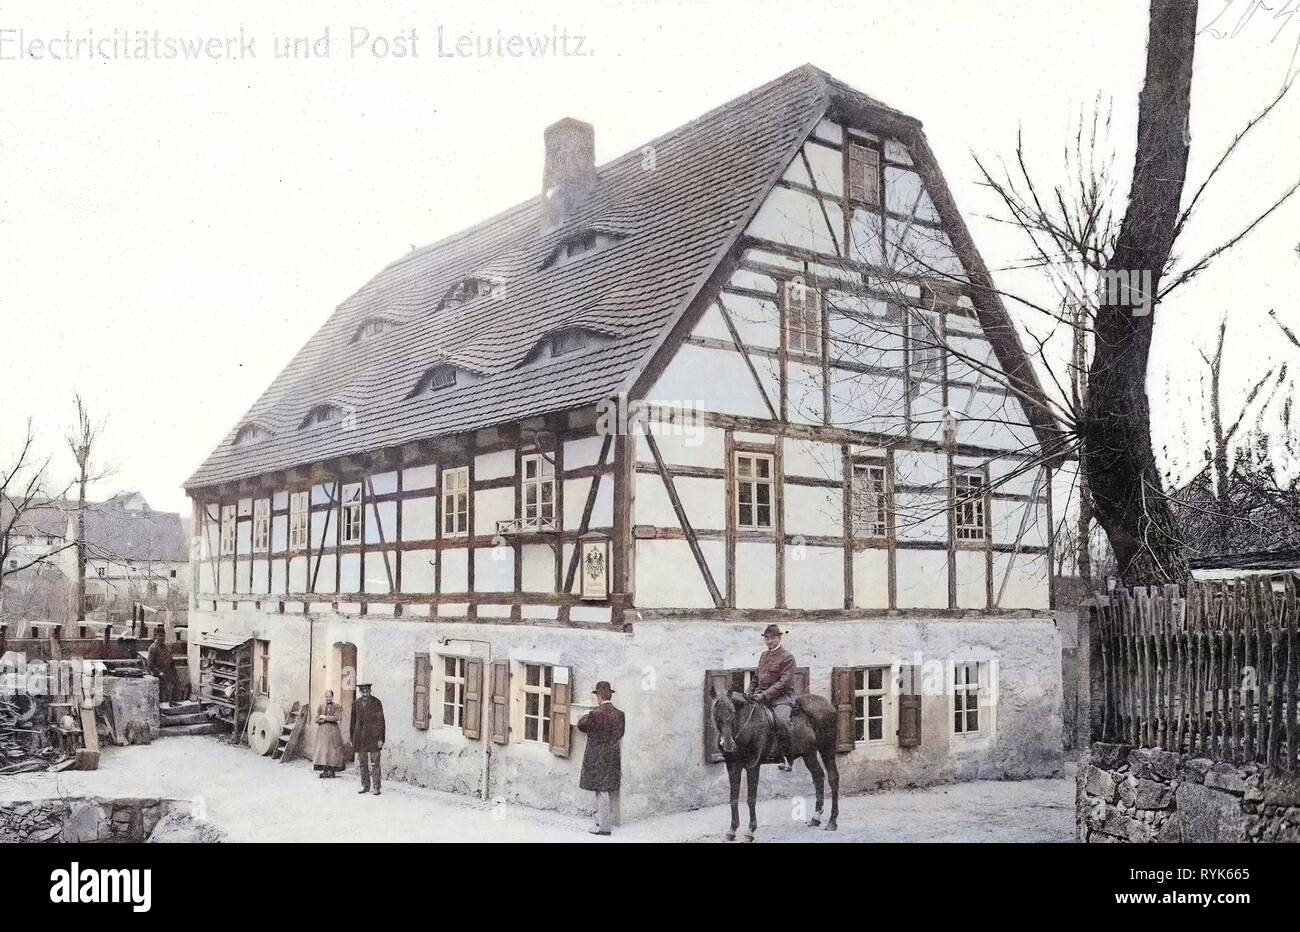 Horses of Landkreis Meißen, Industry in Saxony, Post boxes in Saxony, Post offices in Landkreis Meißen, Leutewitz (Käbschütztal), 1901, Landkreis Meißen, Leutewitz, Elektrizitätswerk und Post, Germany Stock Photo